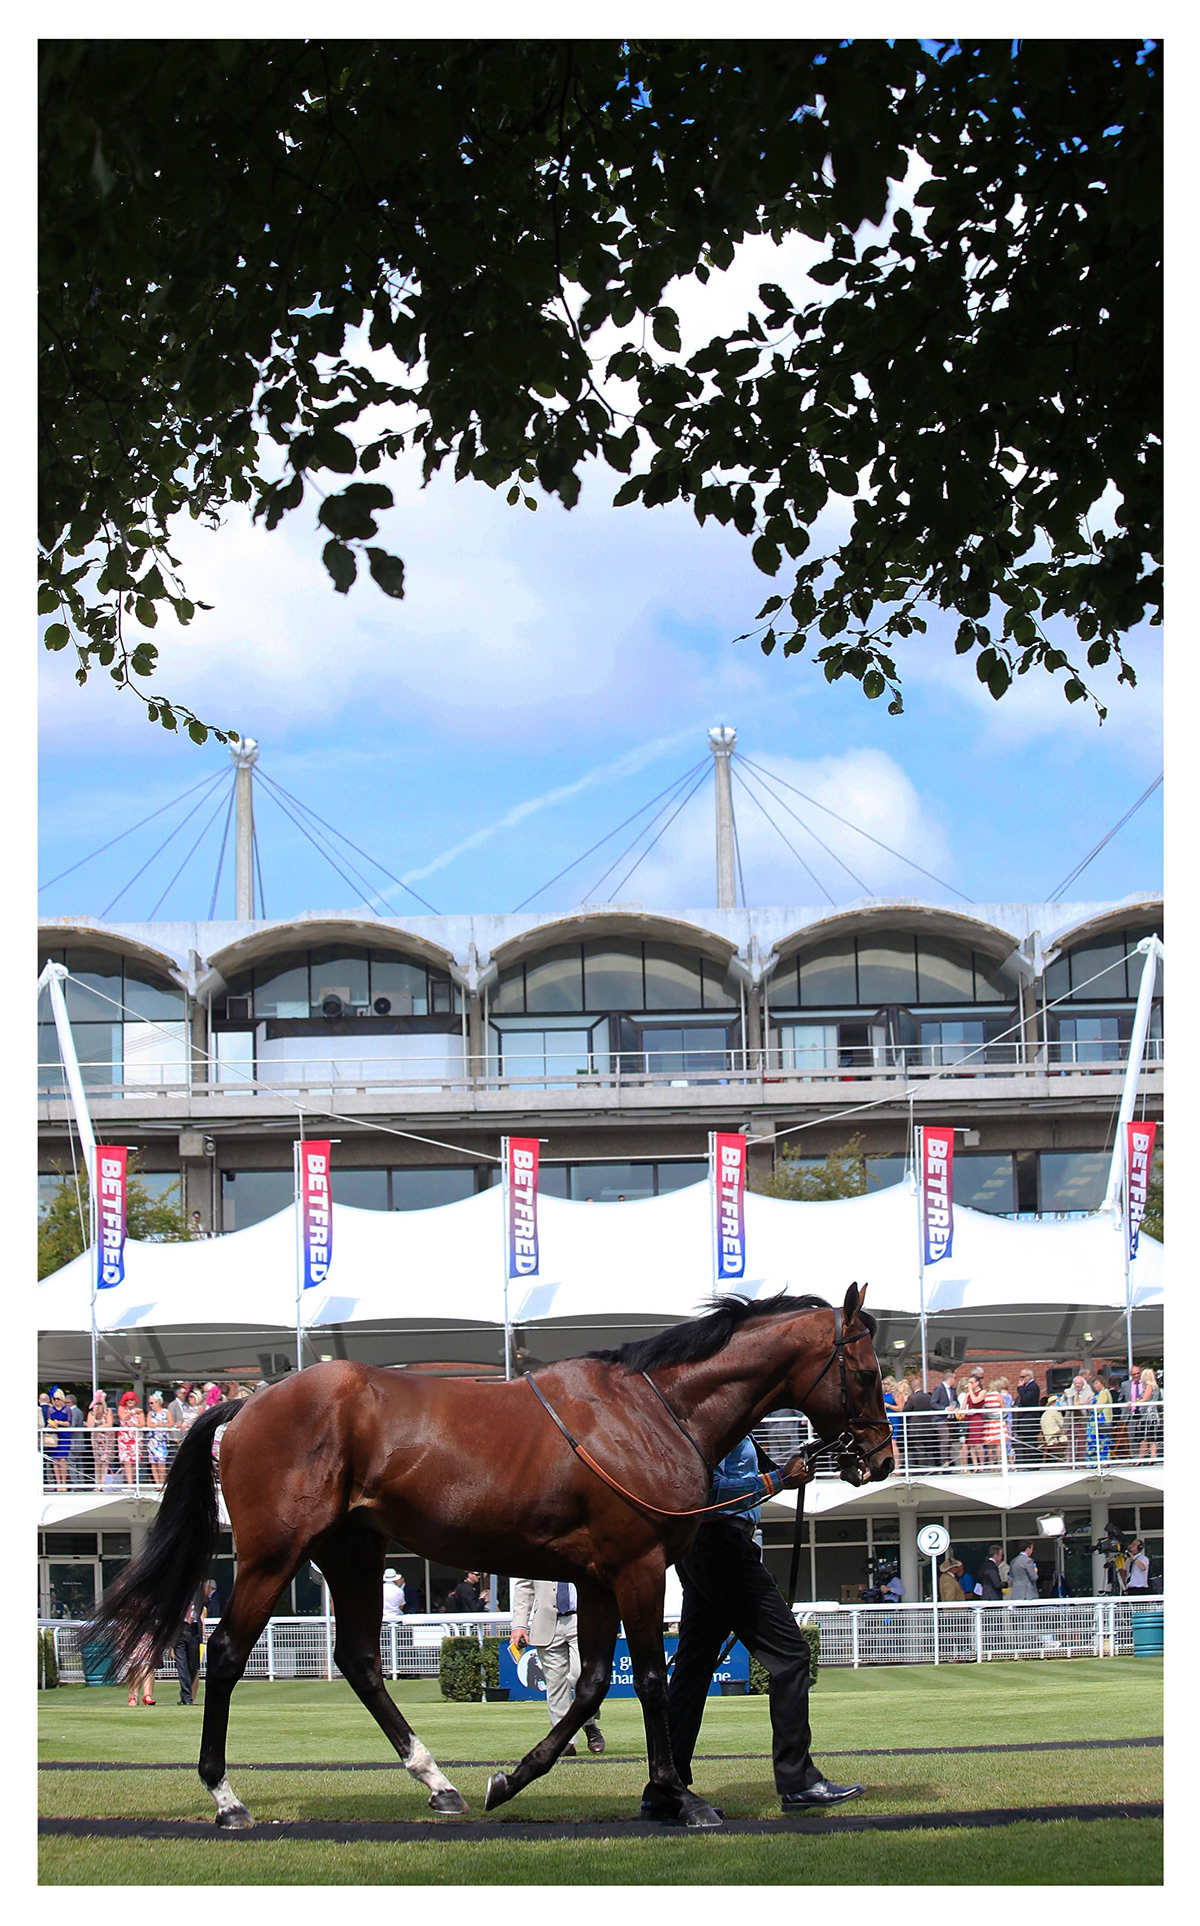 Horse racing thoroughbreds British sport betting and gaming